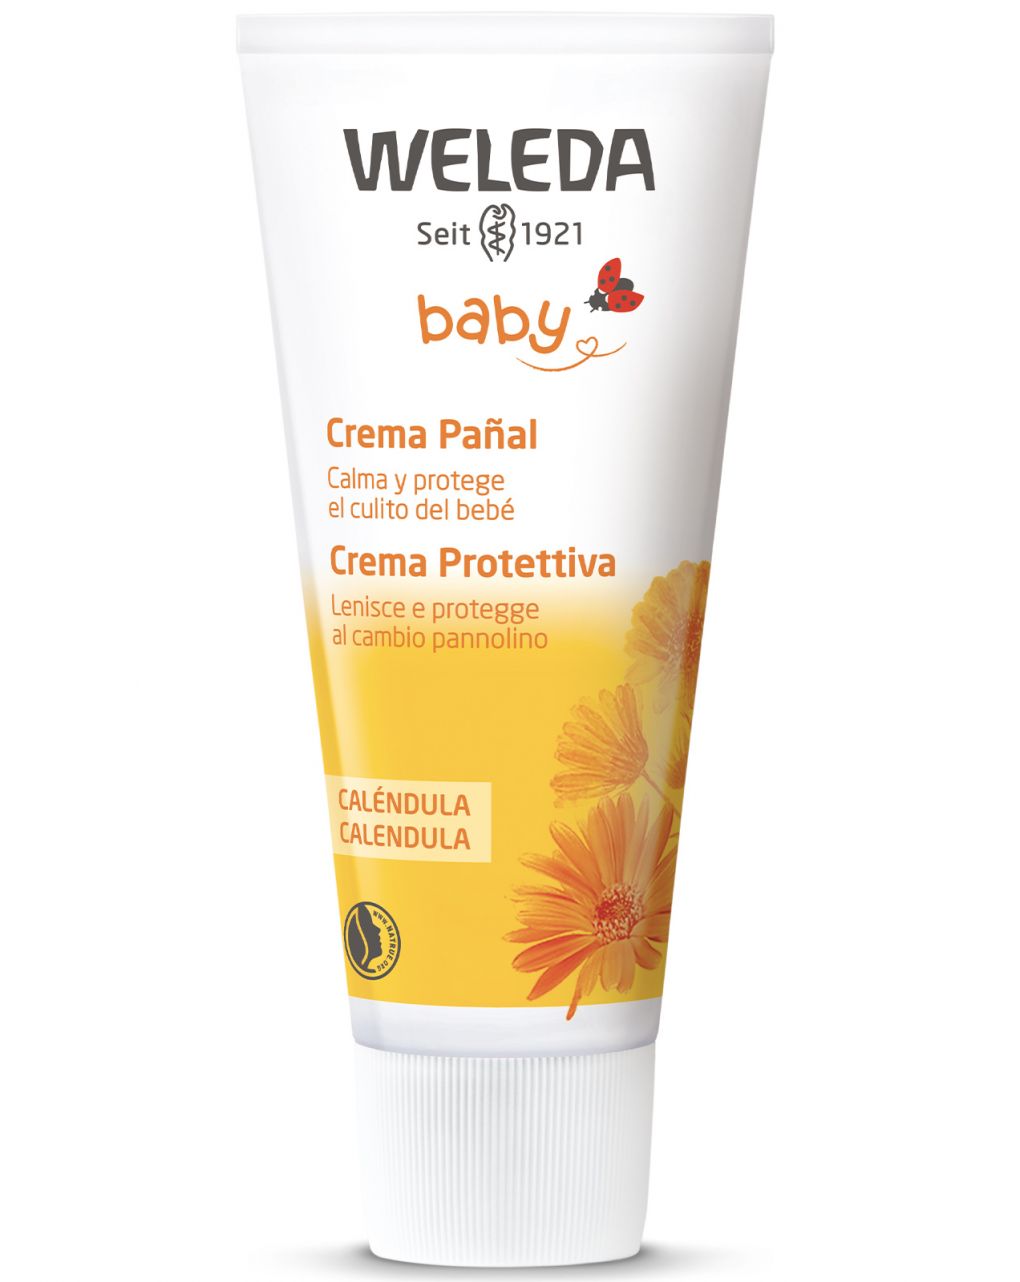 Weleda - baby crema protettiva calendula - Weleda